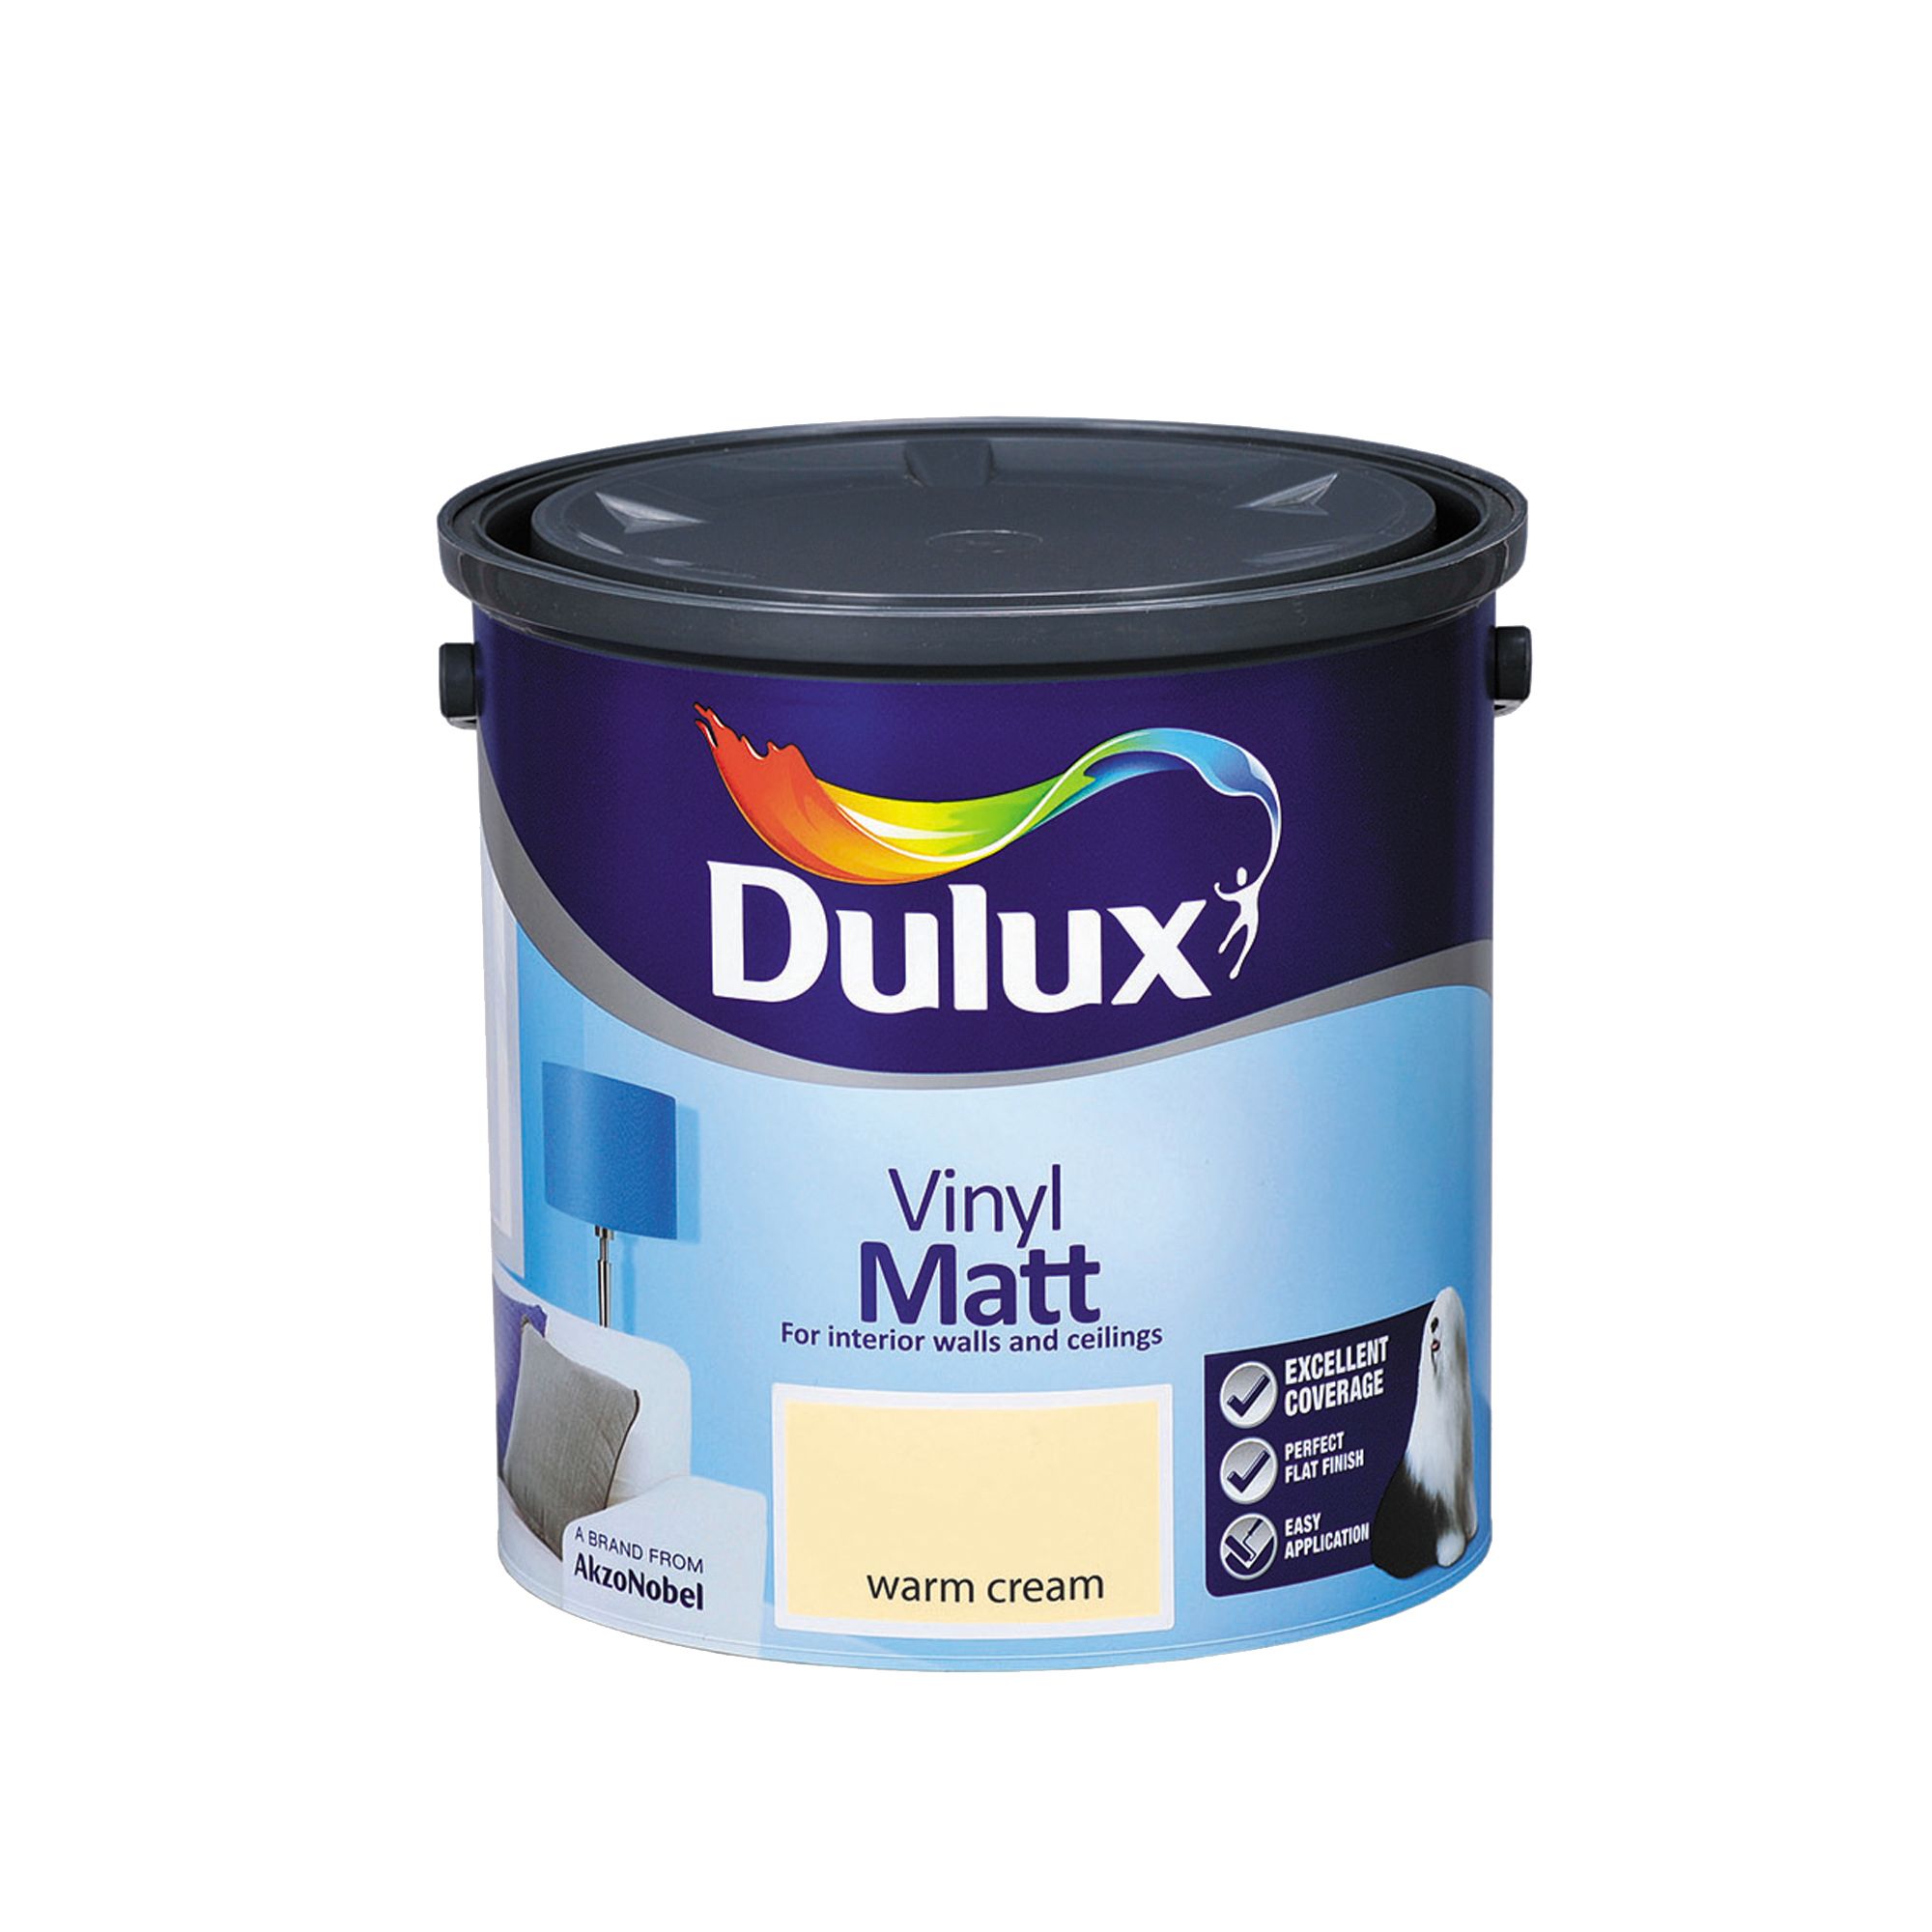 Dulux Easycare Warm cream Vinyl matt Emulsion paint, 2.5L